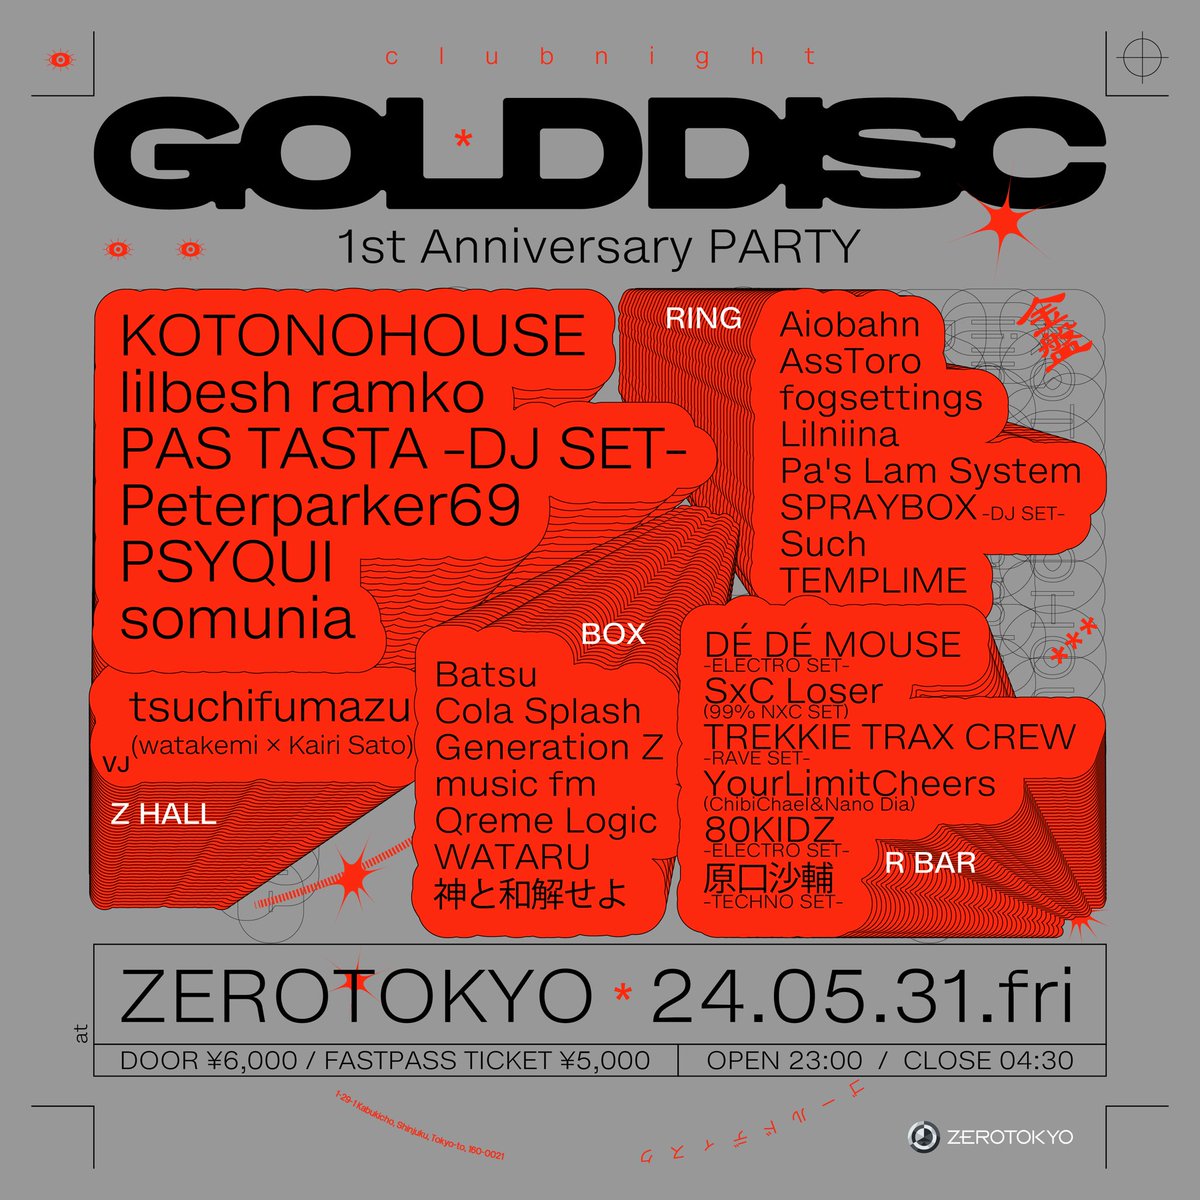 🔥🎪2nd lineup🎪🔥 ２４．０５．３１．ＦＲＩ GOLD DISC 1st Anniversary PARTY ✴︎ｃｌｕｂｎｉｇｈｔ✴︎ @ZEROTOKYO_JAPAN OPEN 23:00 FASTPASS TICKET ¥5,000 🎟️：zerotokyo.zaiko.io/e/gold-disc-1s… #GOLDDISC_ZEROTOKYO